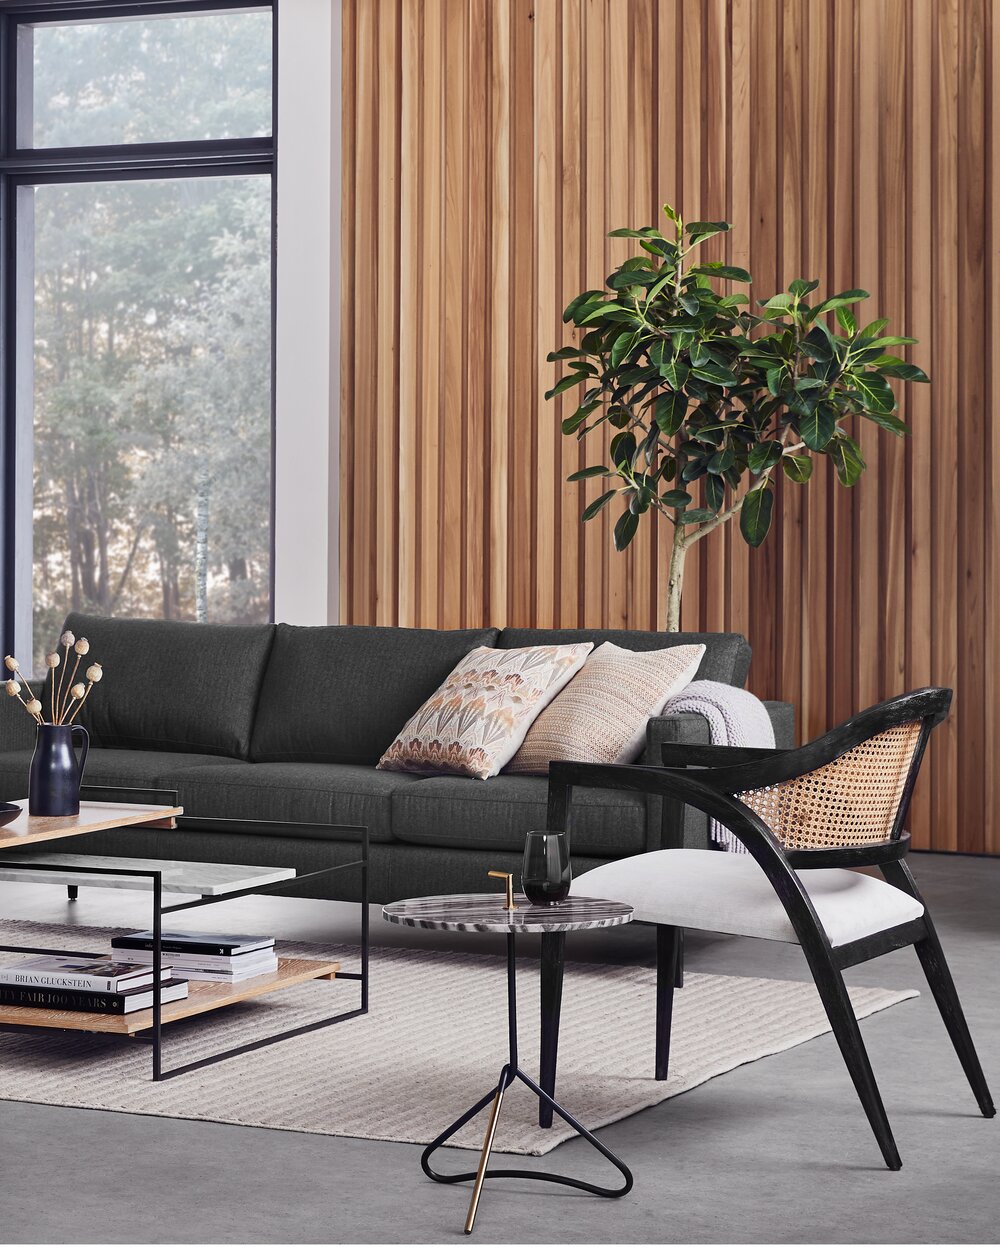 Cool cozy living room design